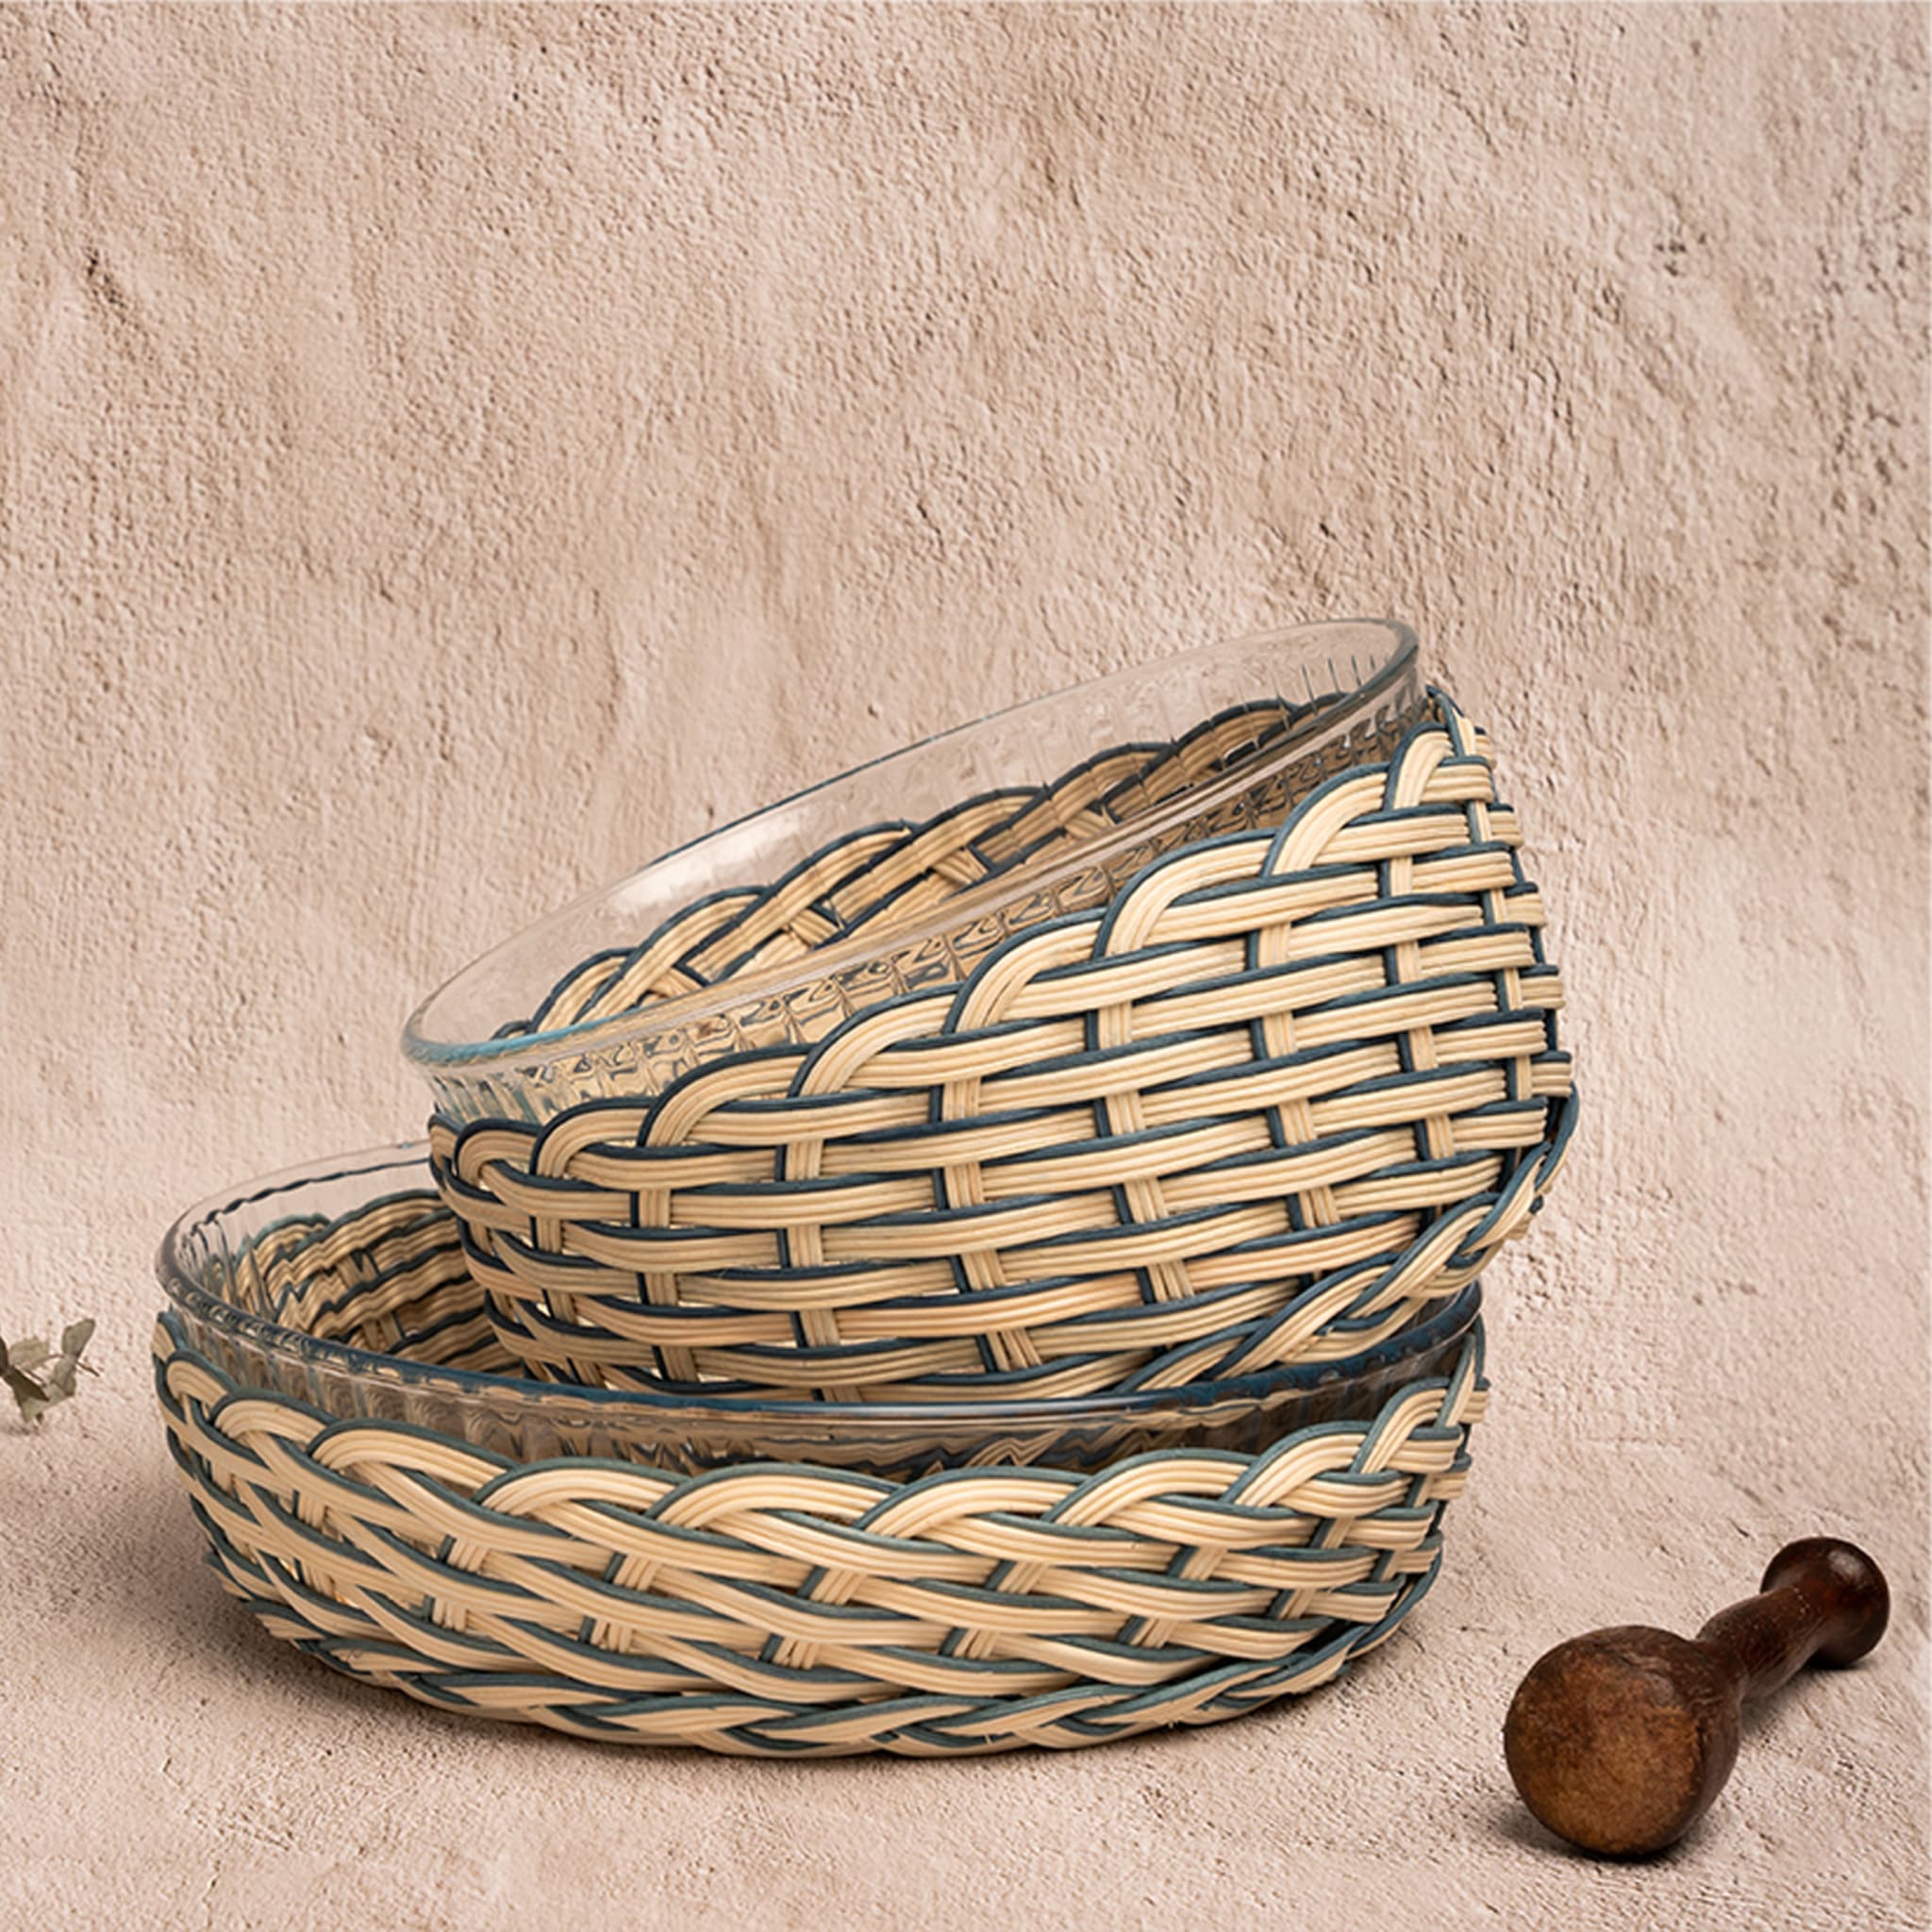 Soufflé Mold With Woad Blue Wicker Basket - Alternative view 2